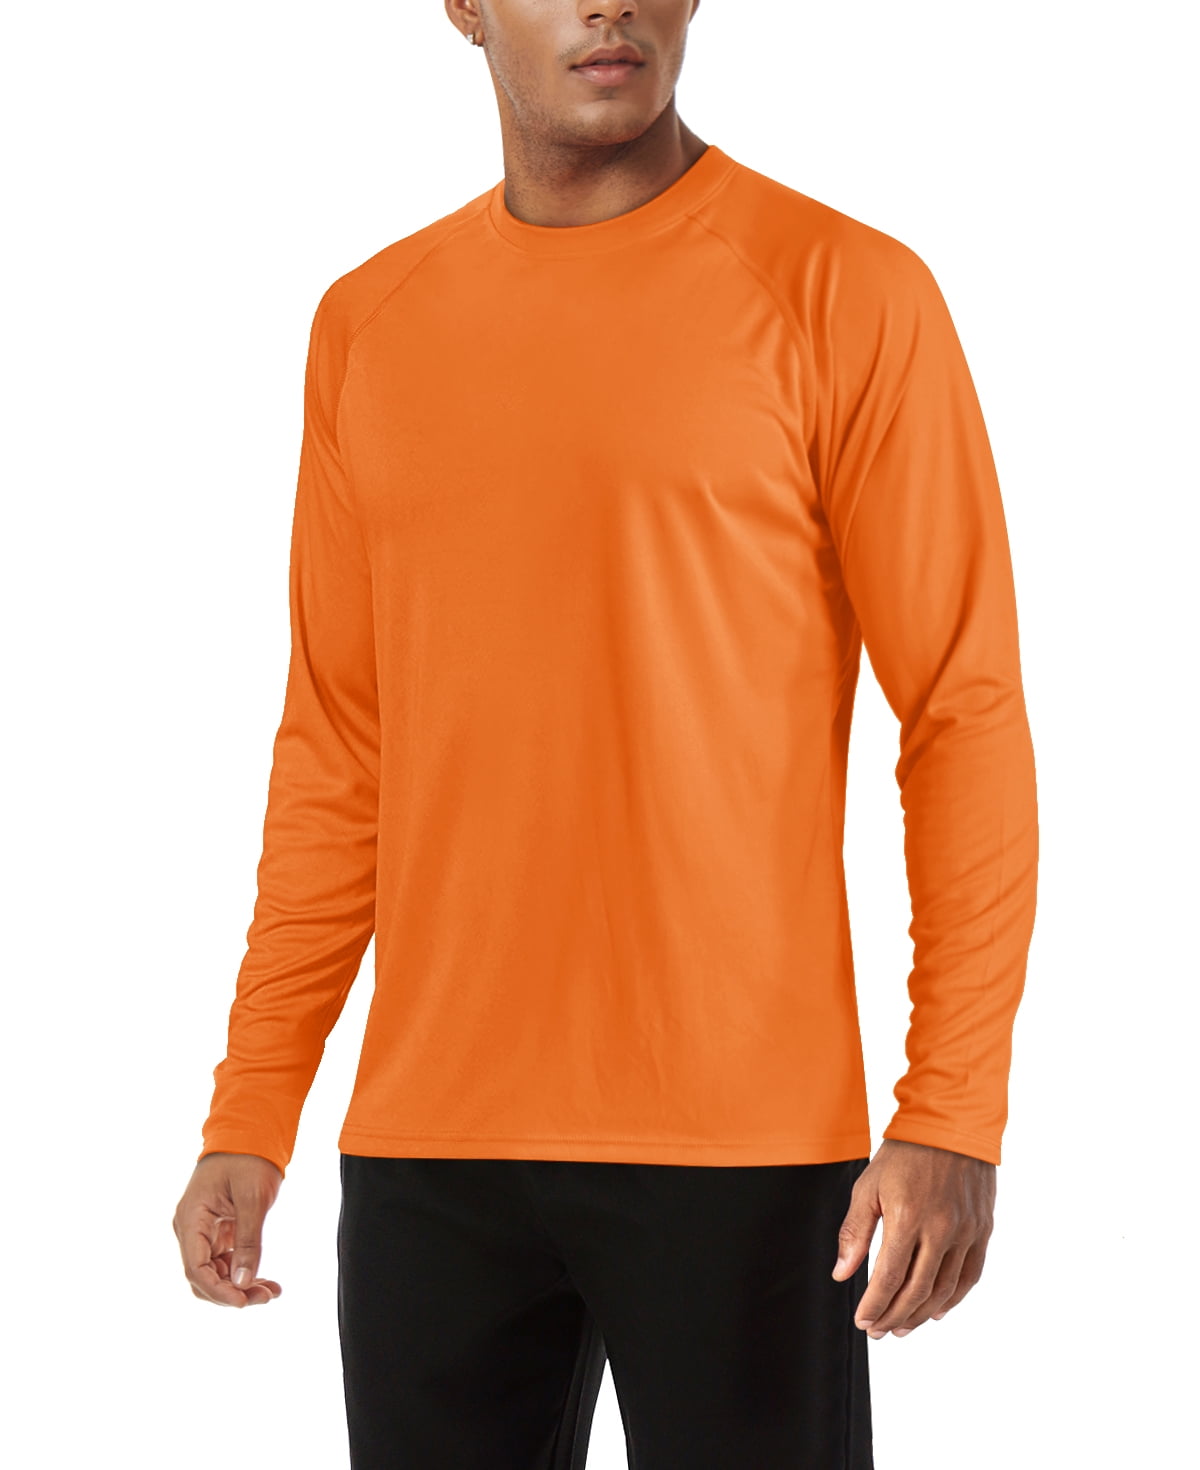 Outdoor Performance T-Shirt TACVASEN Womens Long Sleeve Tops UV Sun Protection Shirt UPF 50 